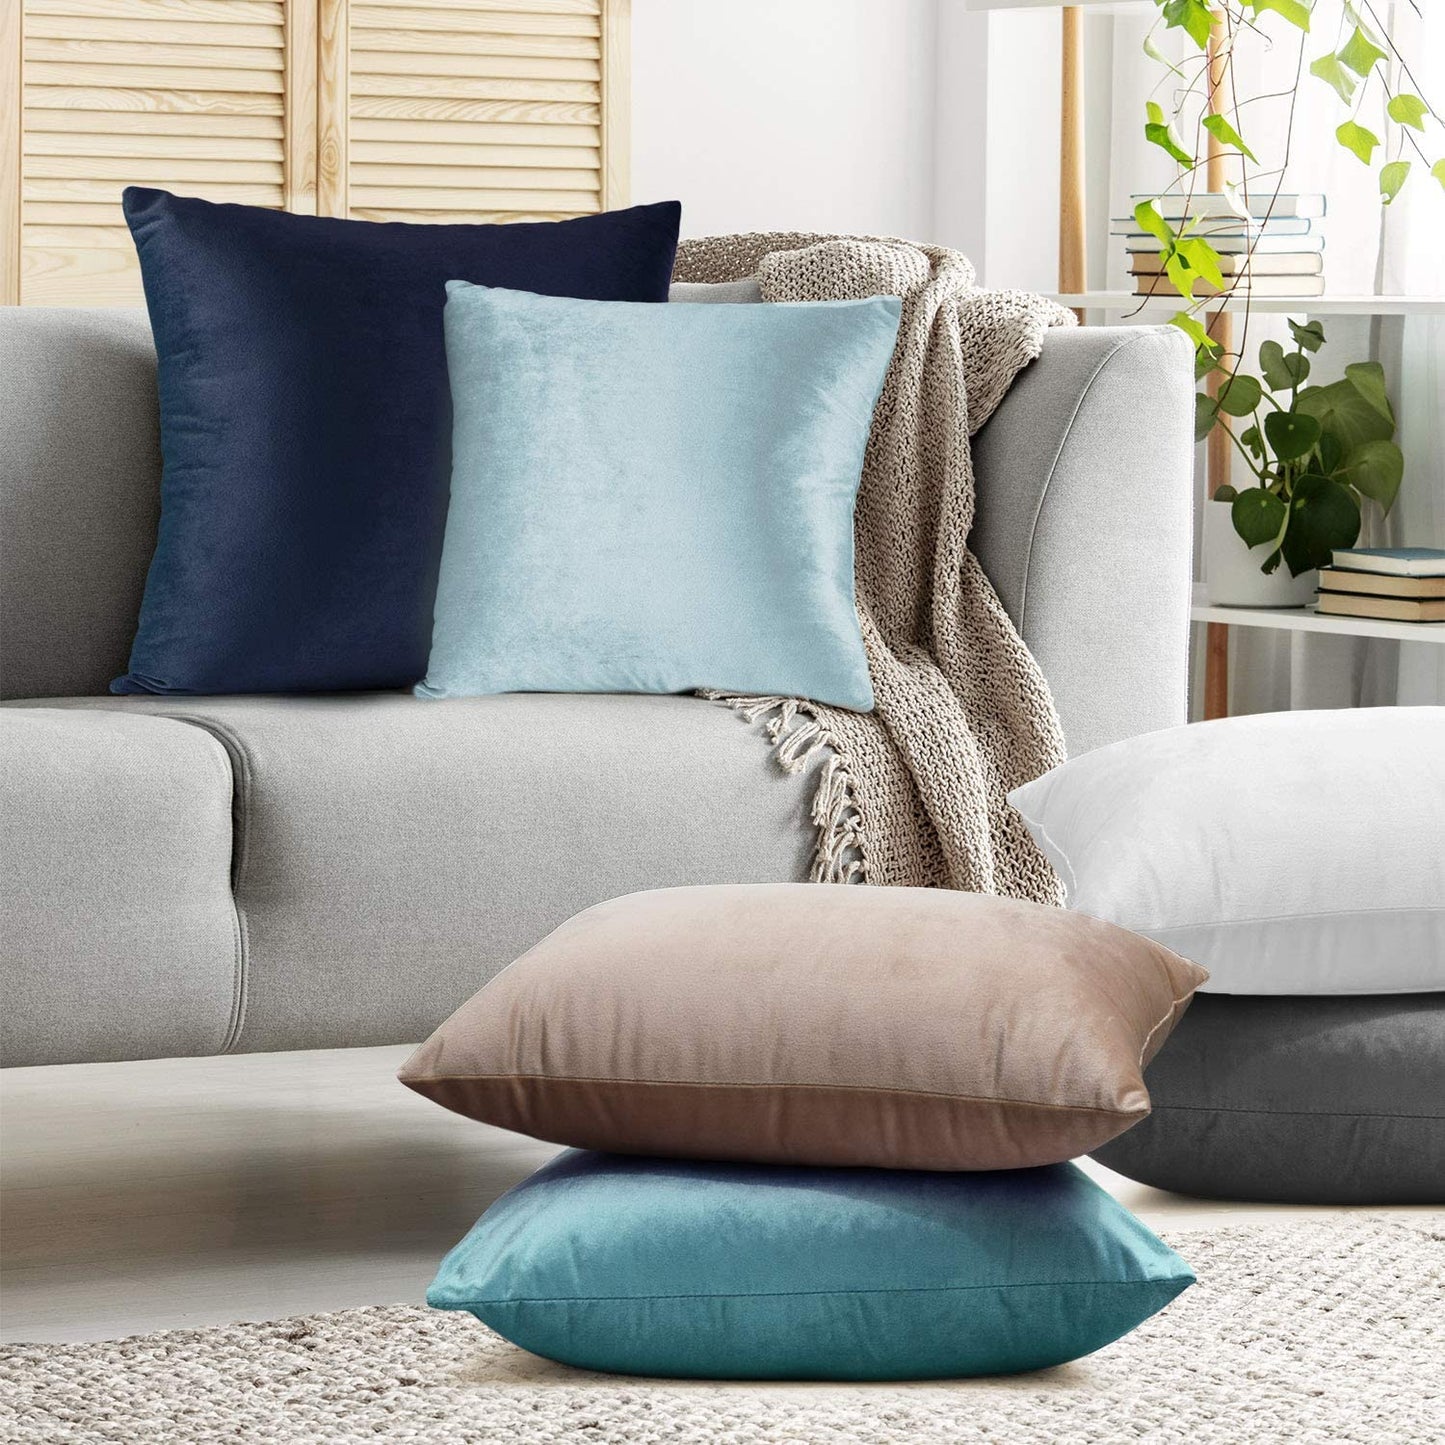 Plain Velvet Cushion 16 x 16 inches - Navy Blue